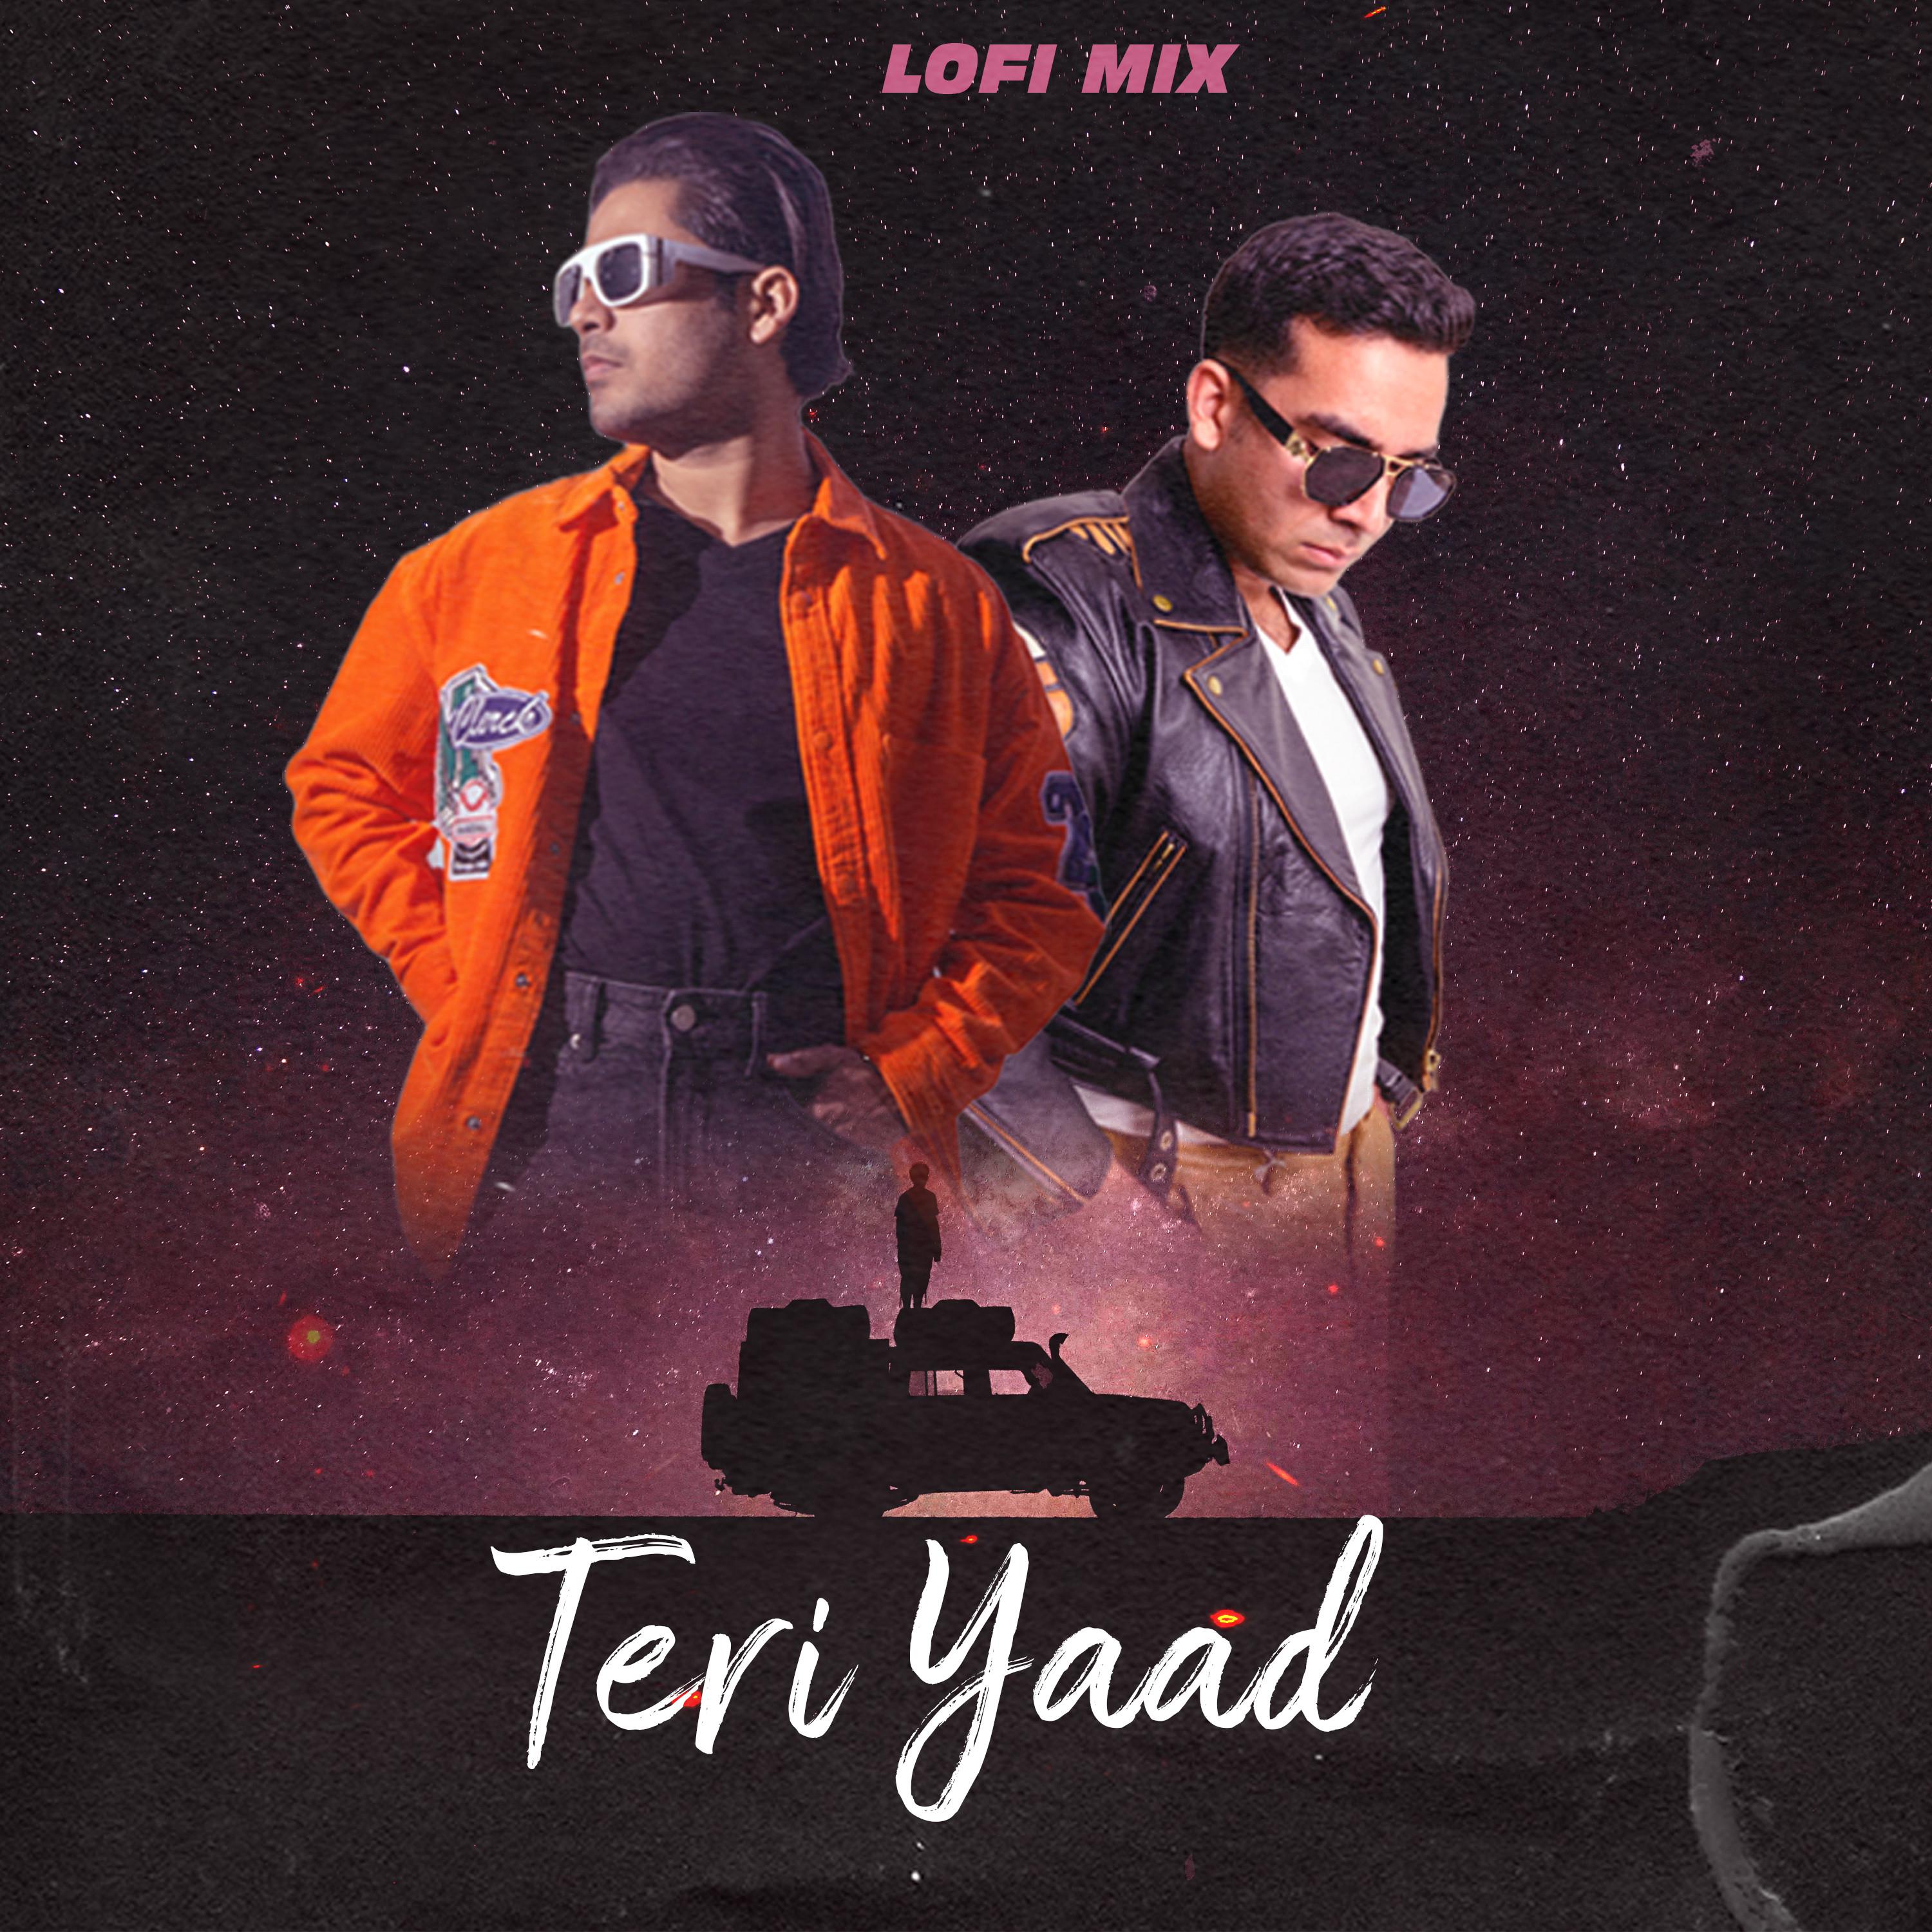 Jack Love - Teri Yaad (Lofi Mix)